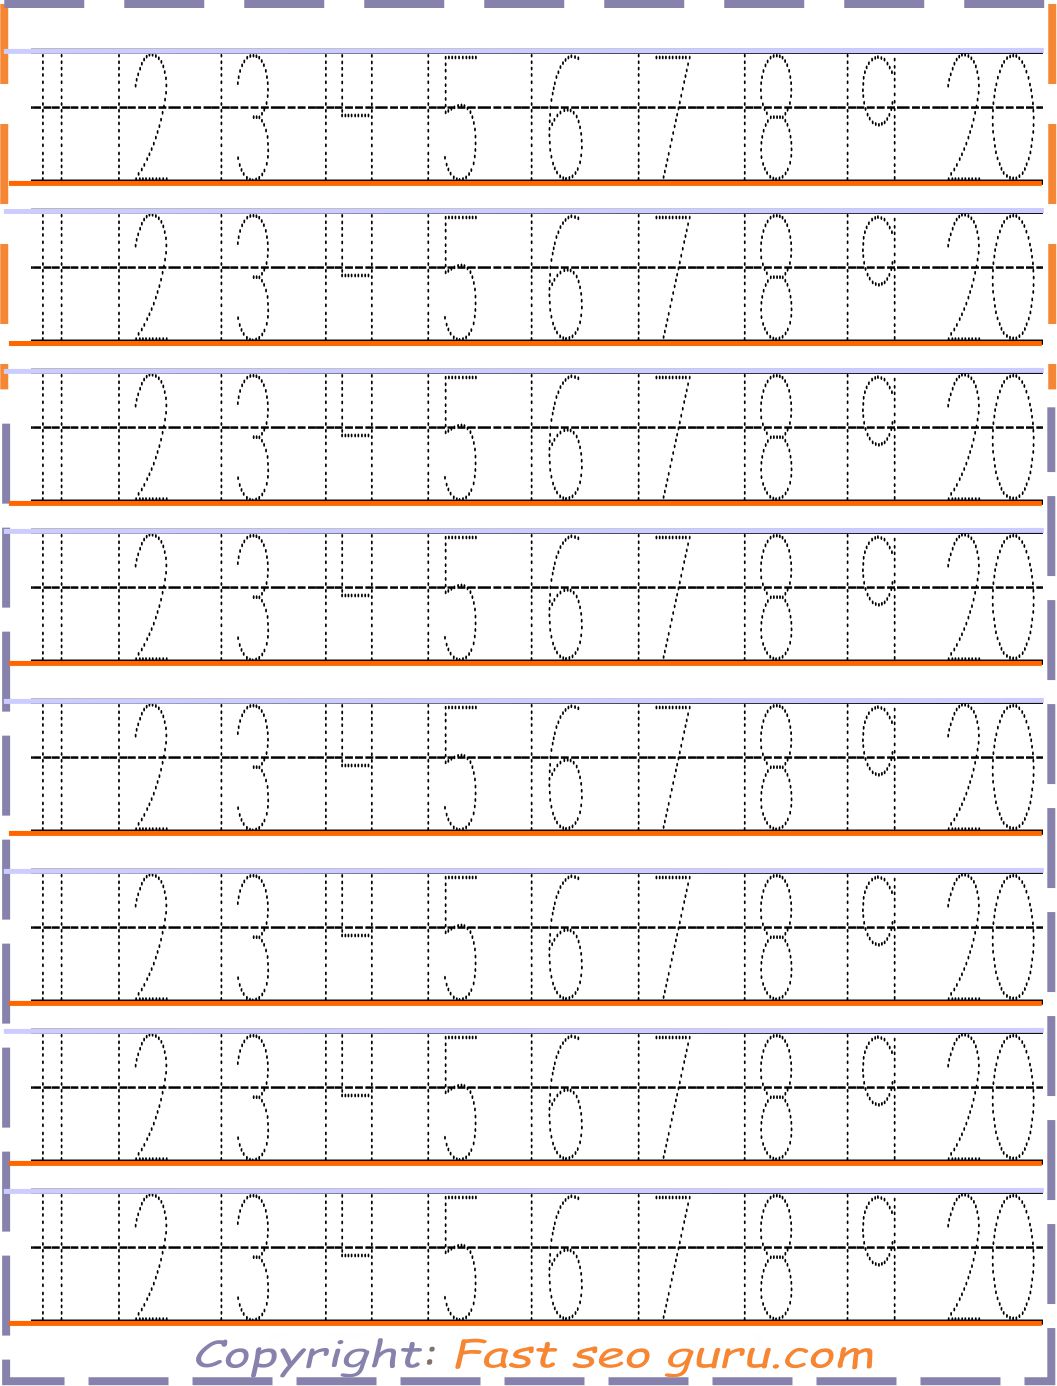 Number tracing 12-20 worksheets for kids